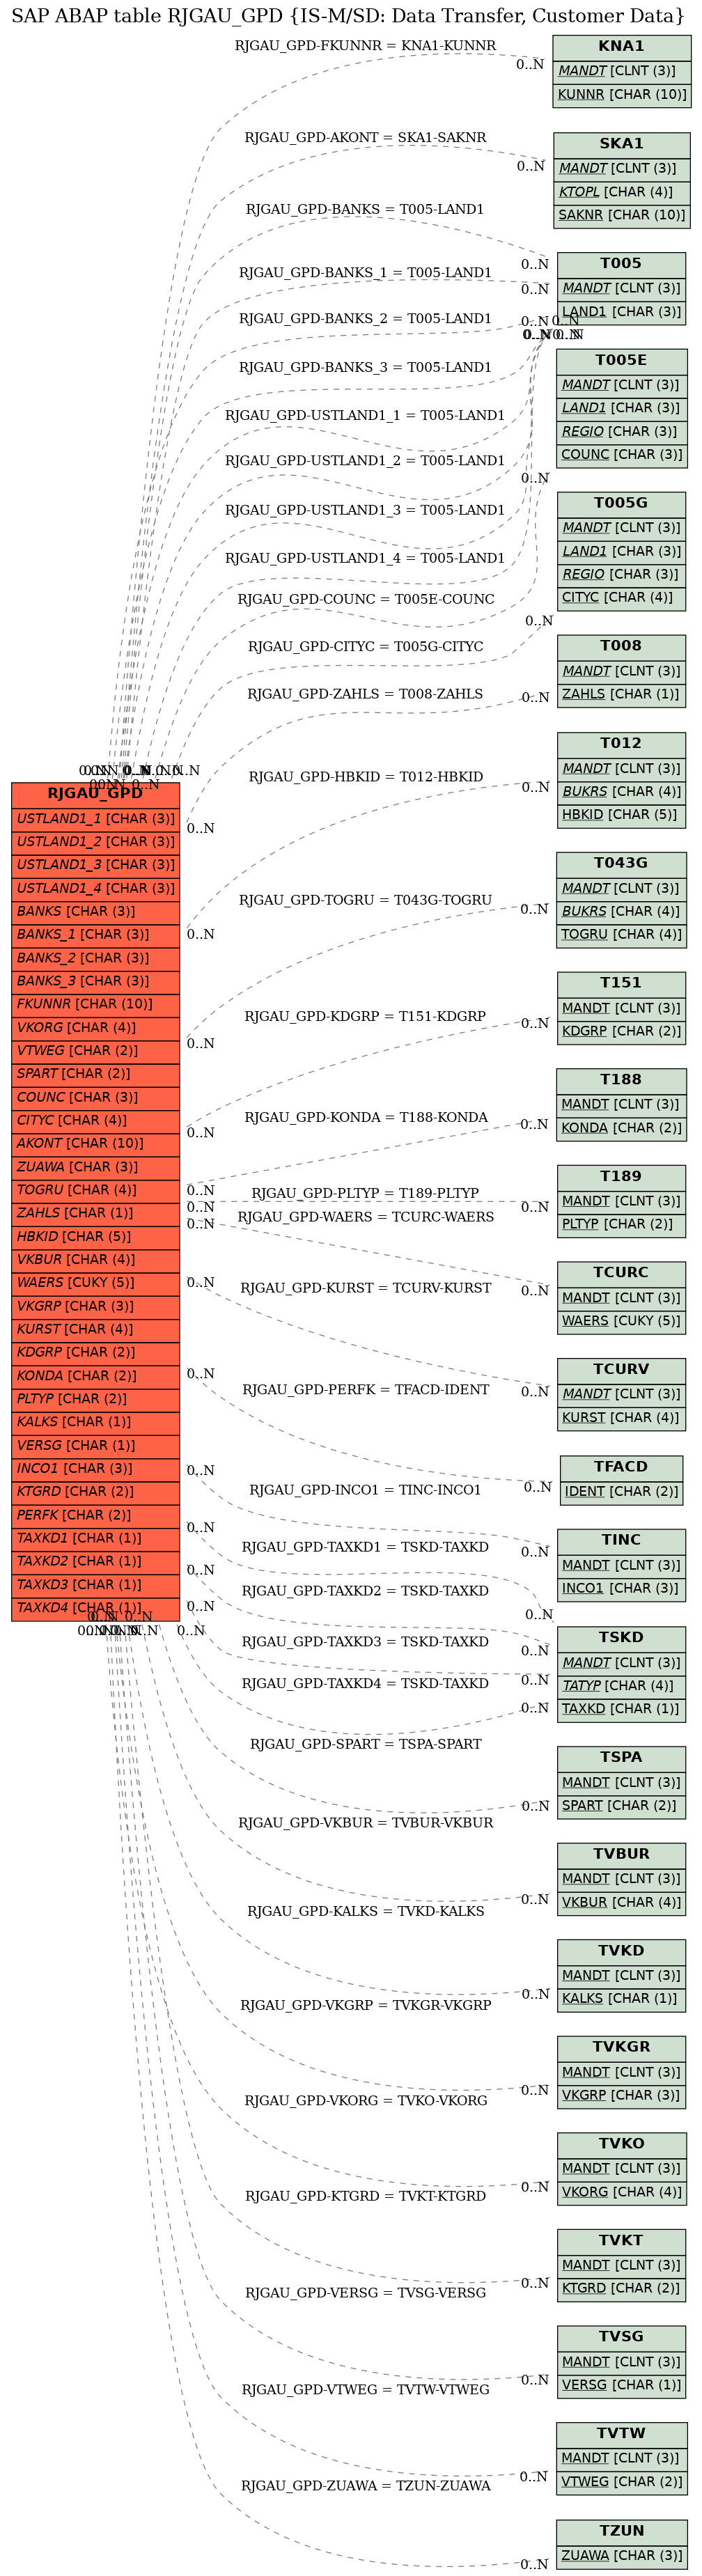 E-R Diagram for table RJGAU_GPD (IS-M/SD: Data Transfer, Customer Data)